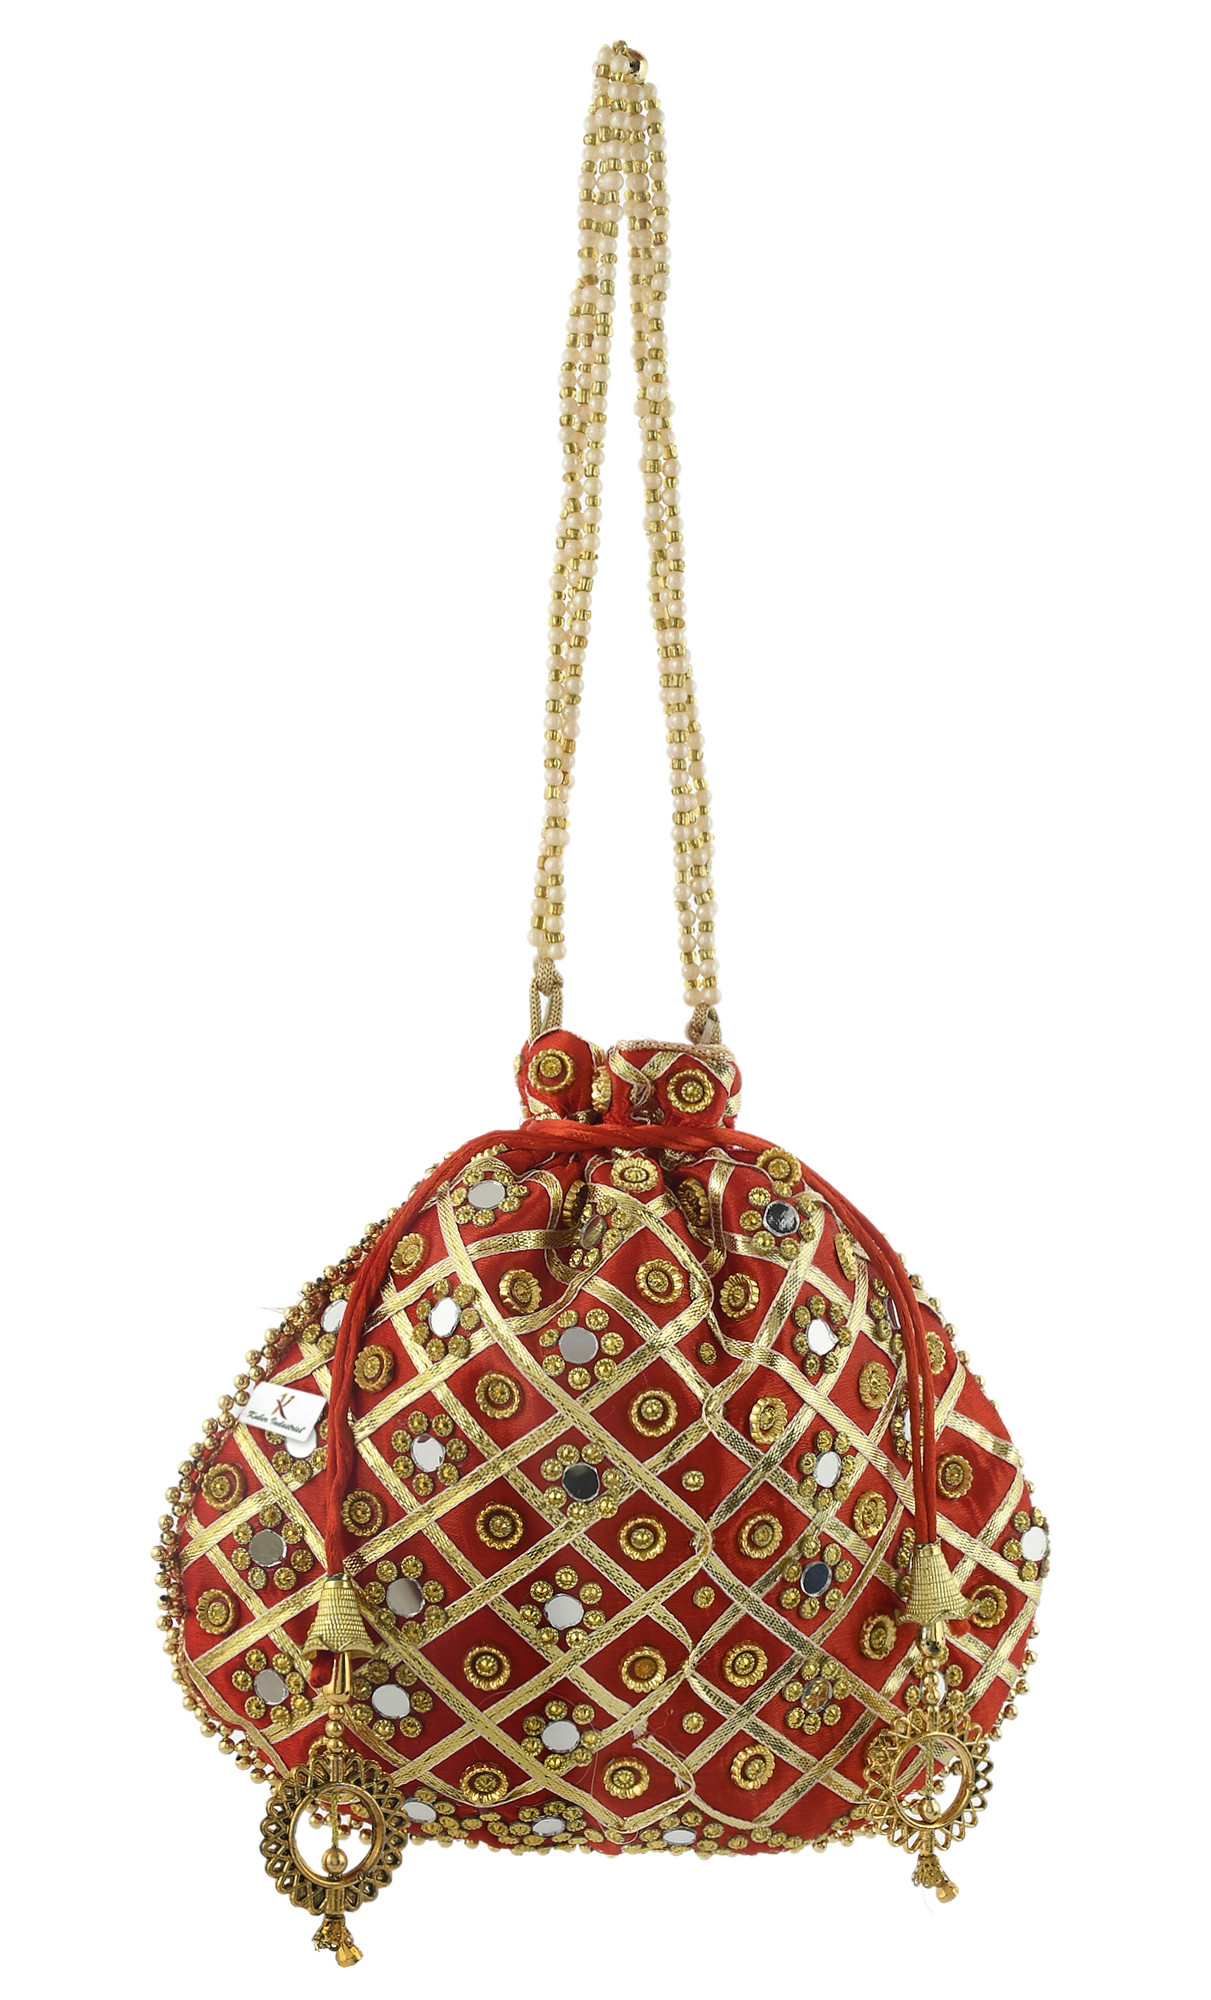 Kuber Industries Silk Traditional Mirror Work Clutch Potli Batwa Pouch Bag For Women/Girls (Red)-KUBMRT11487